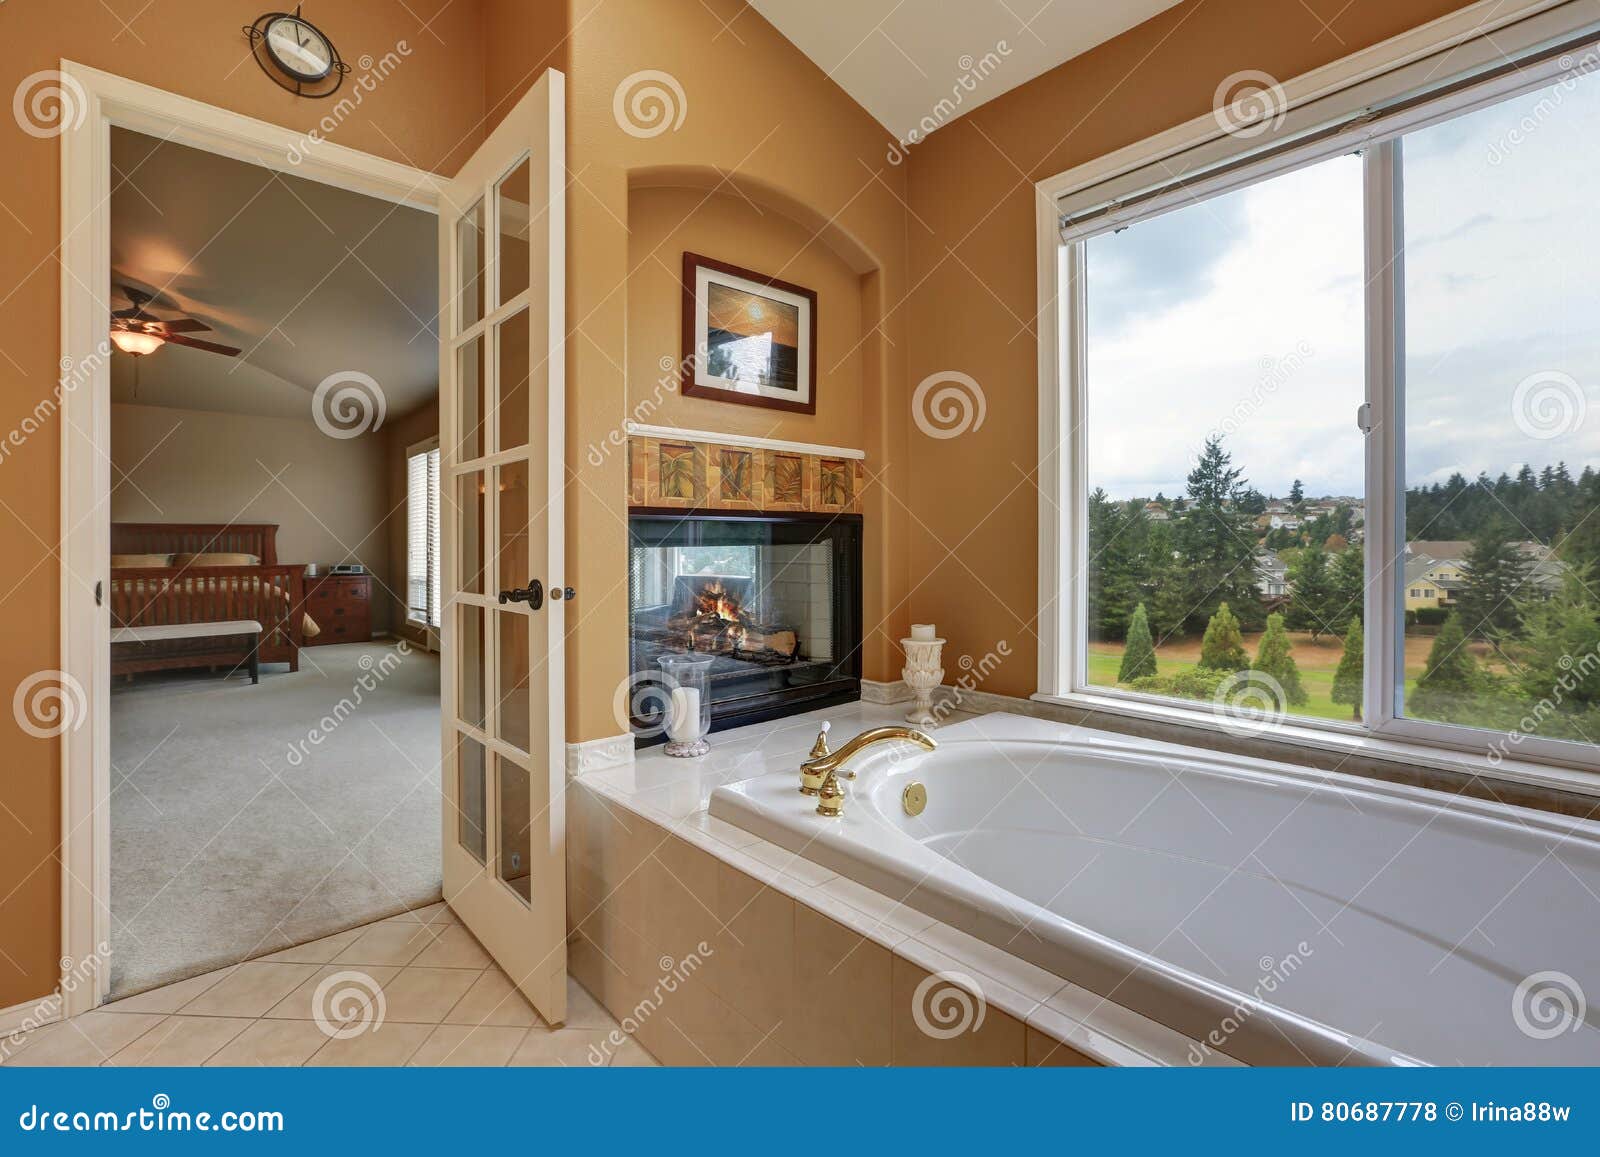 Luxury Bathroom Interior Wall Mounted Fireplace With Bath Tub